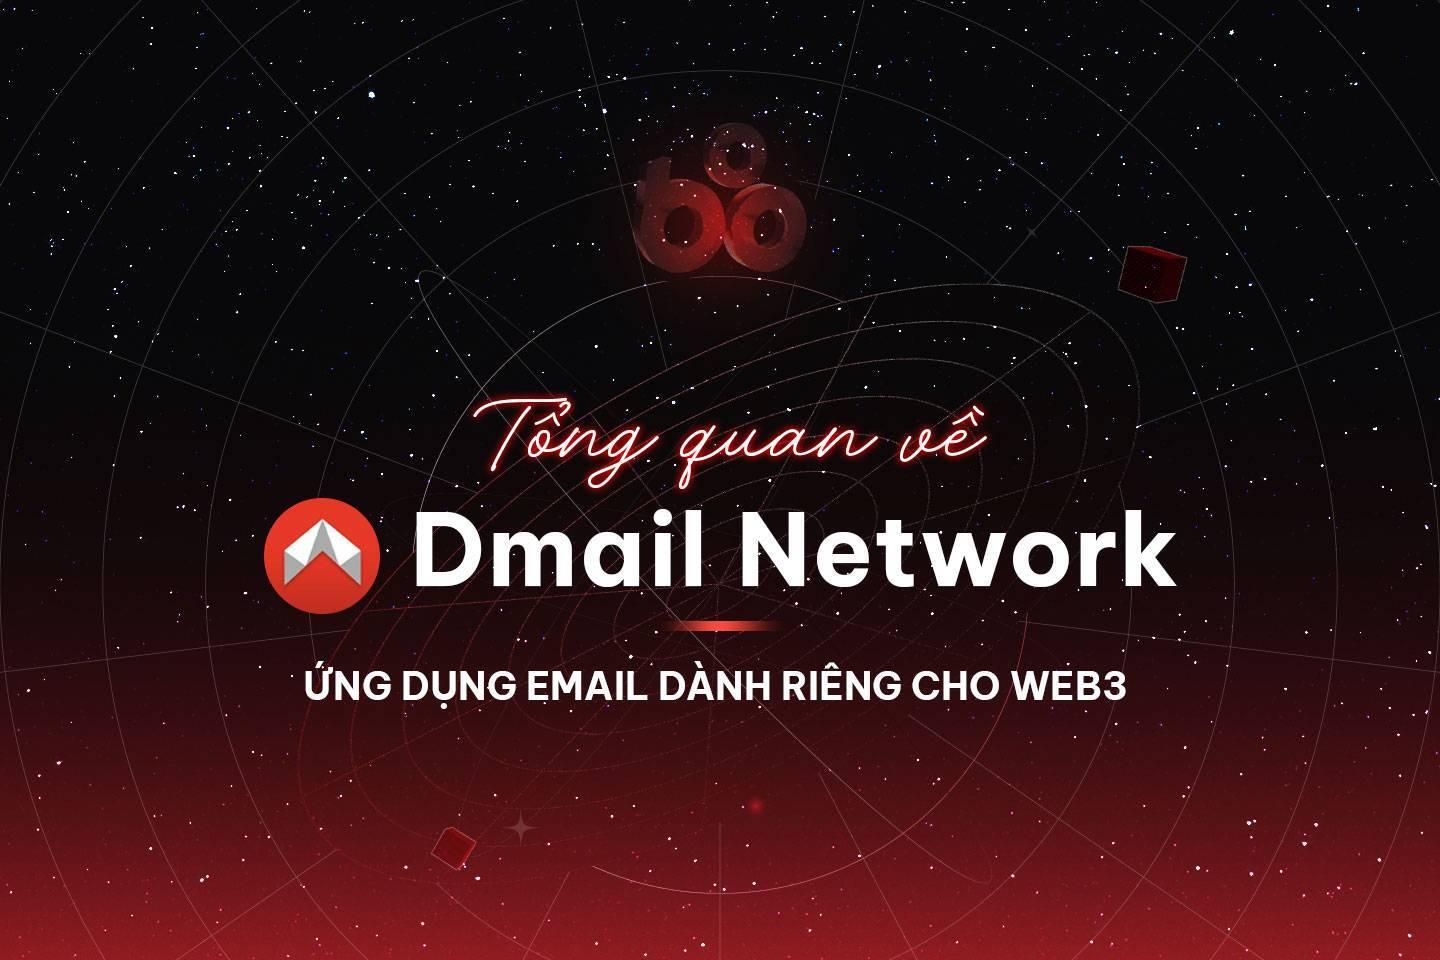 dmail-network-la-gi-tim-hieu-va-huong-dan-su-dung-ung-dung-email-danh-rieng-cho-web3